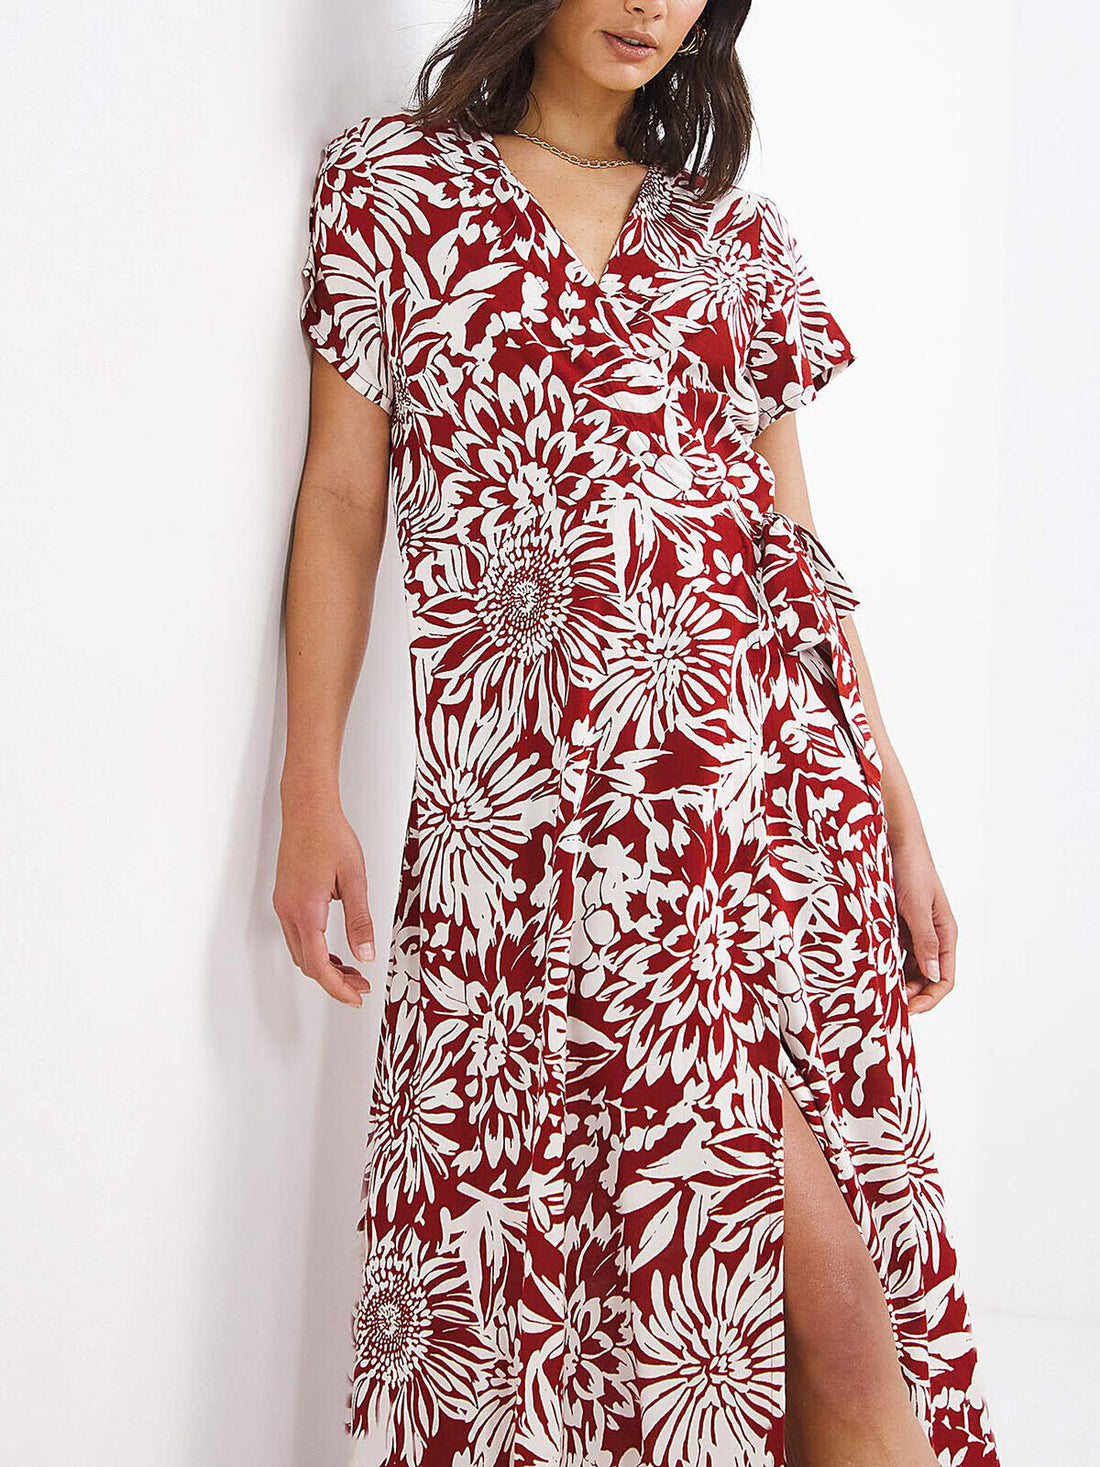 Joe Browns Red Printed Wrap Maxi Dress Sizes 16, 18, 20, 22, 26, 28 RRP £60